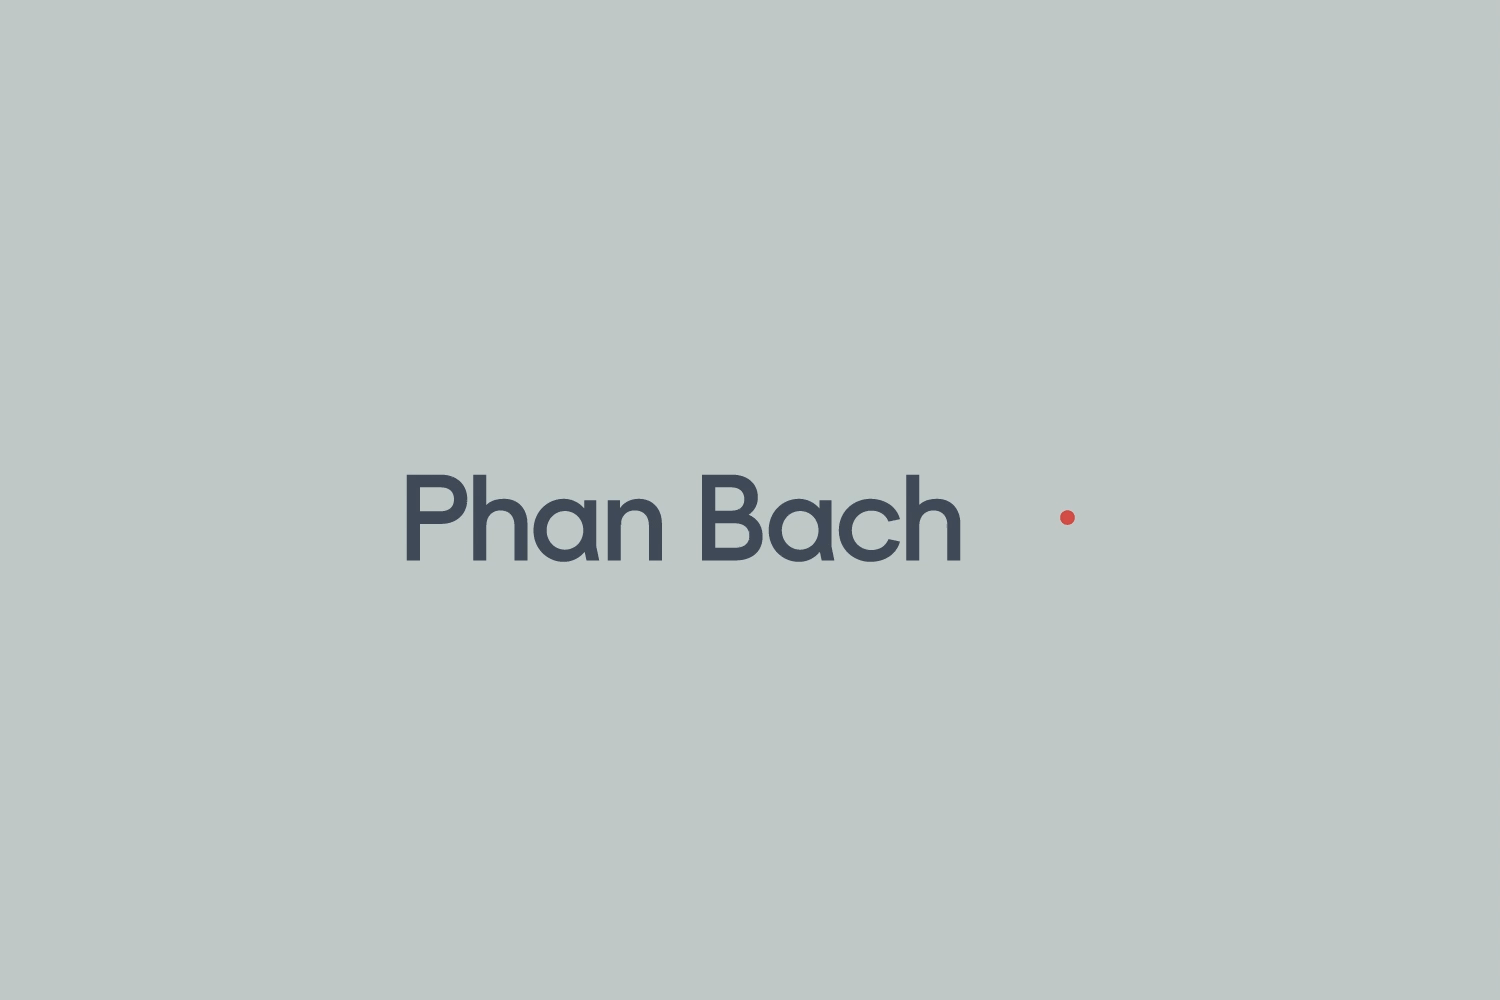 Phan Bach logo animation